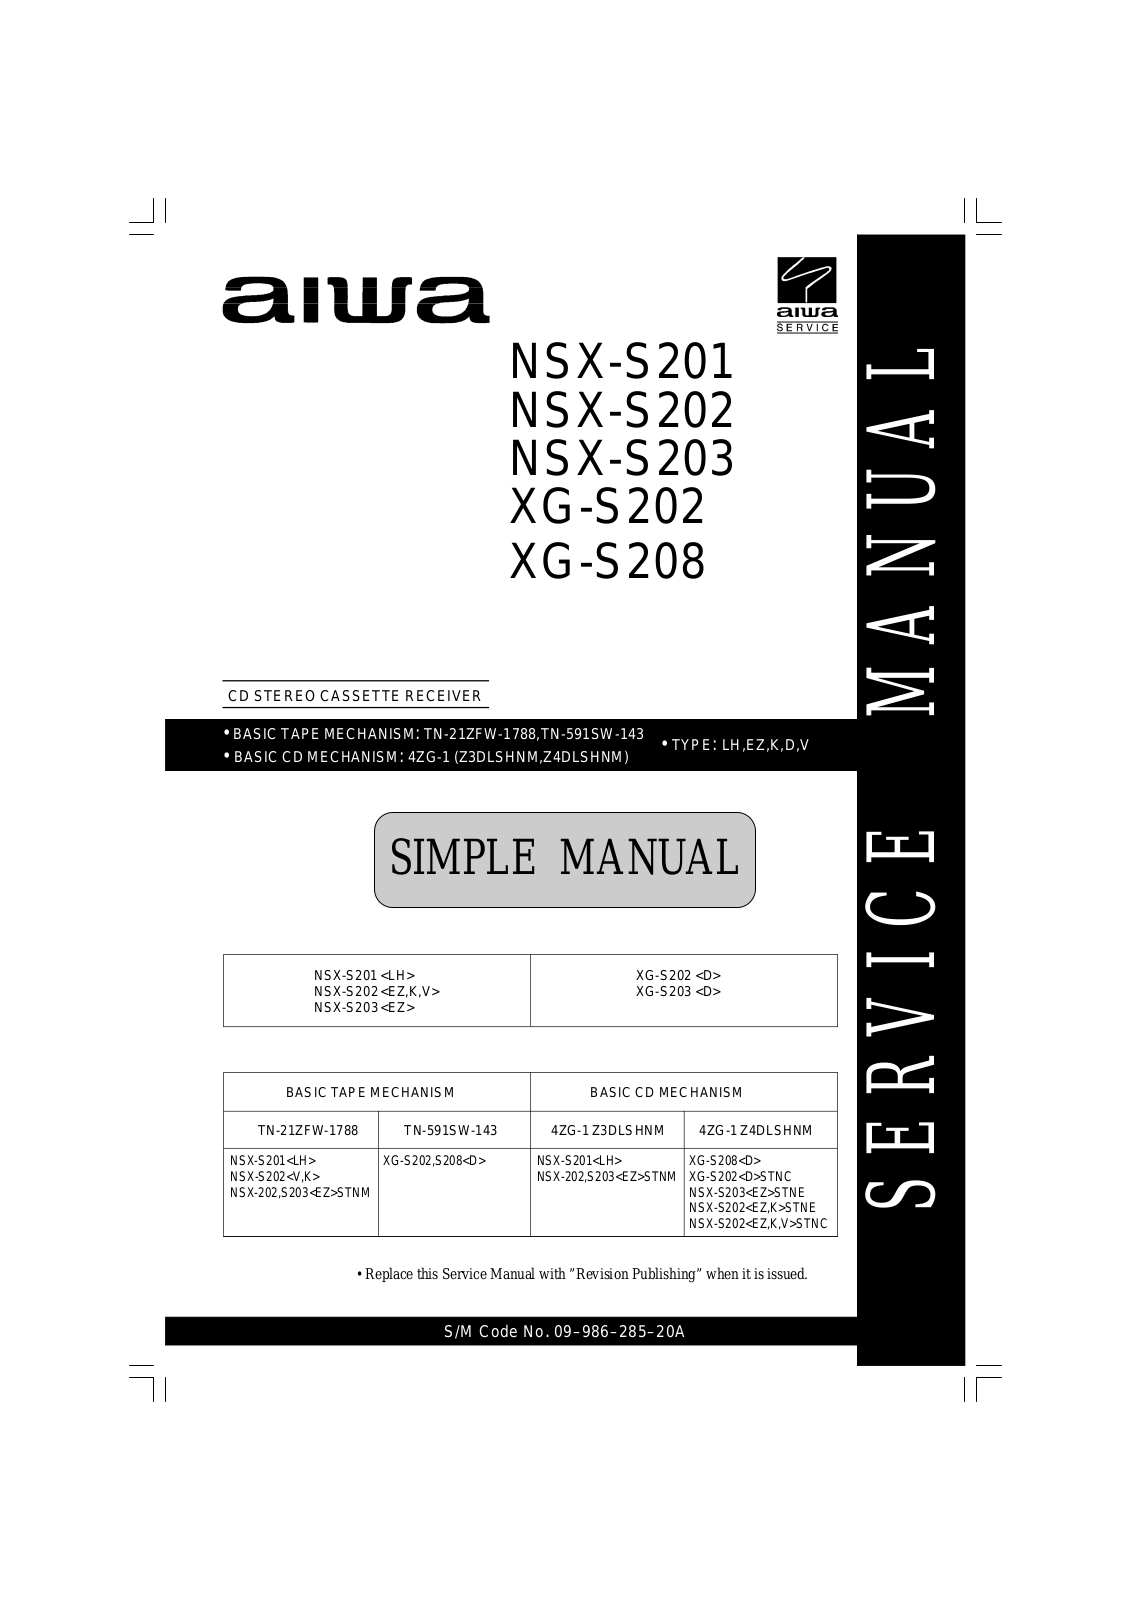 Aiwa NSX-S202, NSX-S203, XG-S202, XG-S208 Service Manual